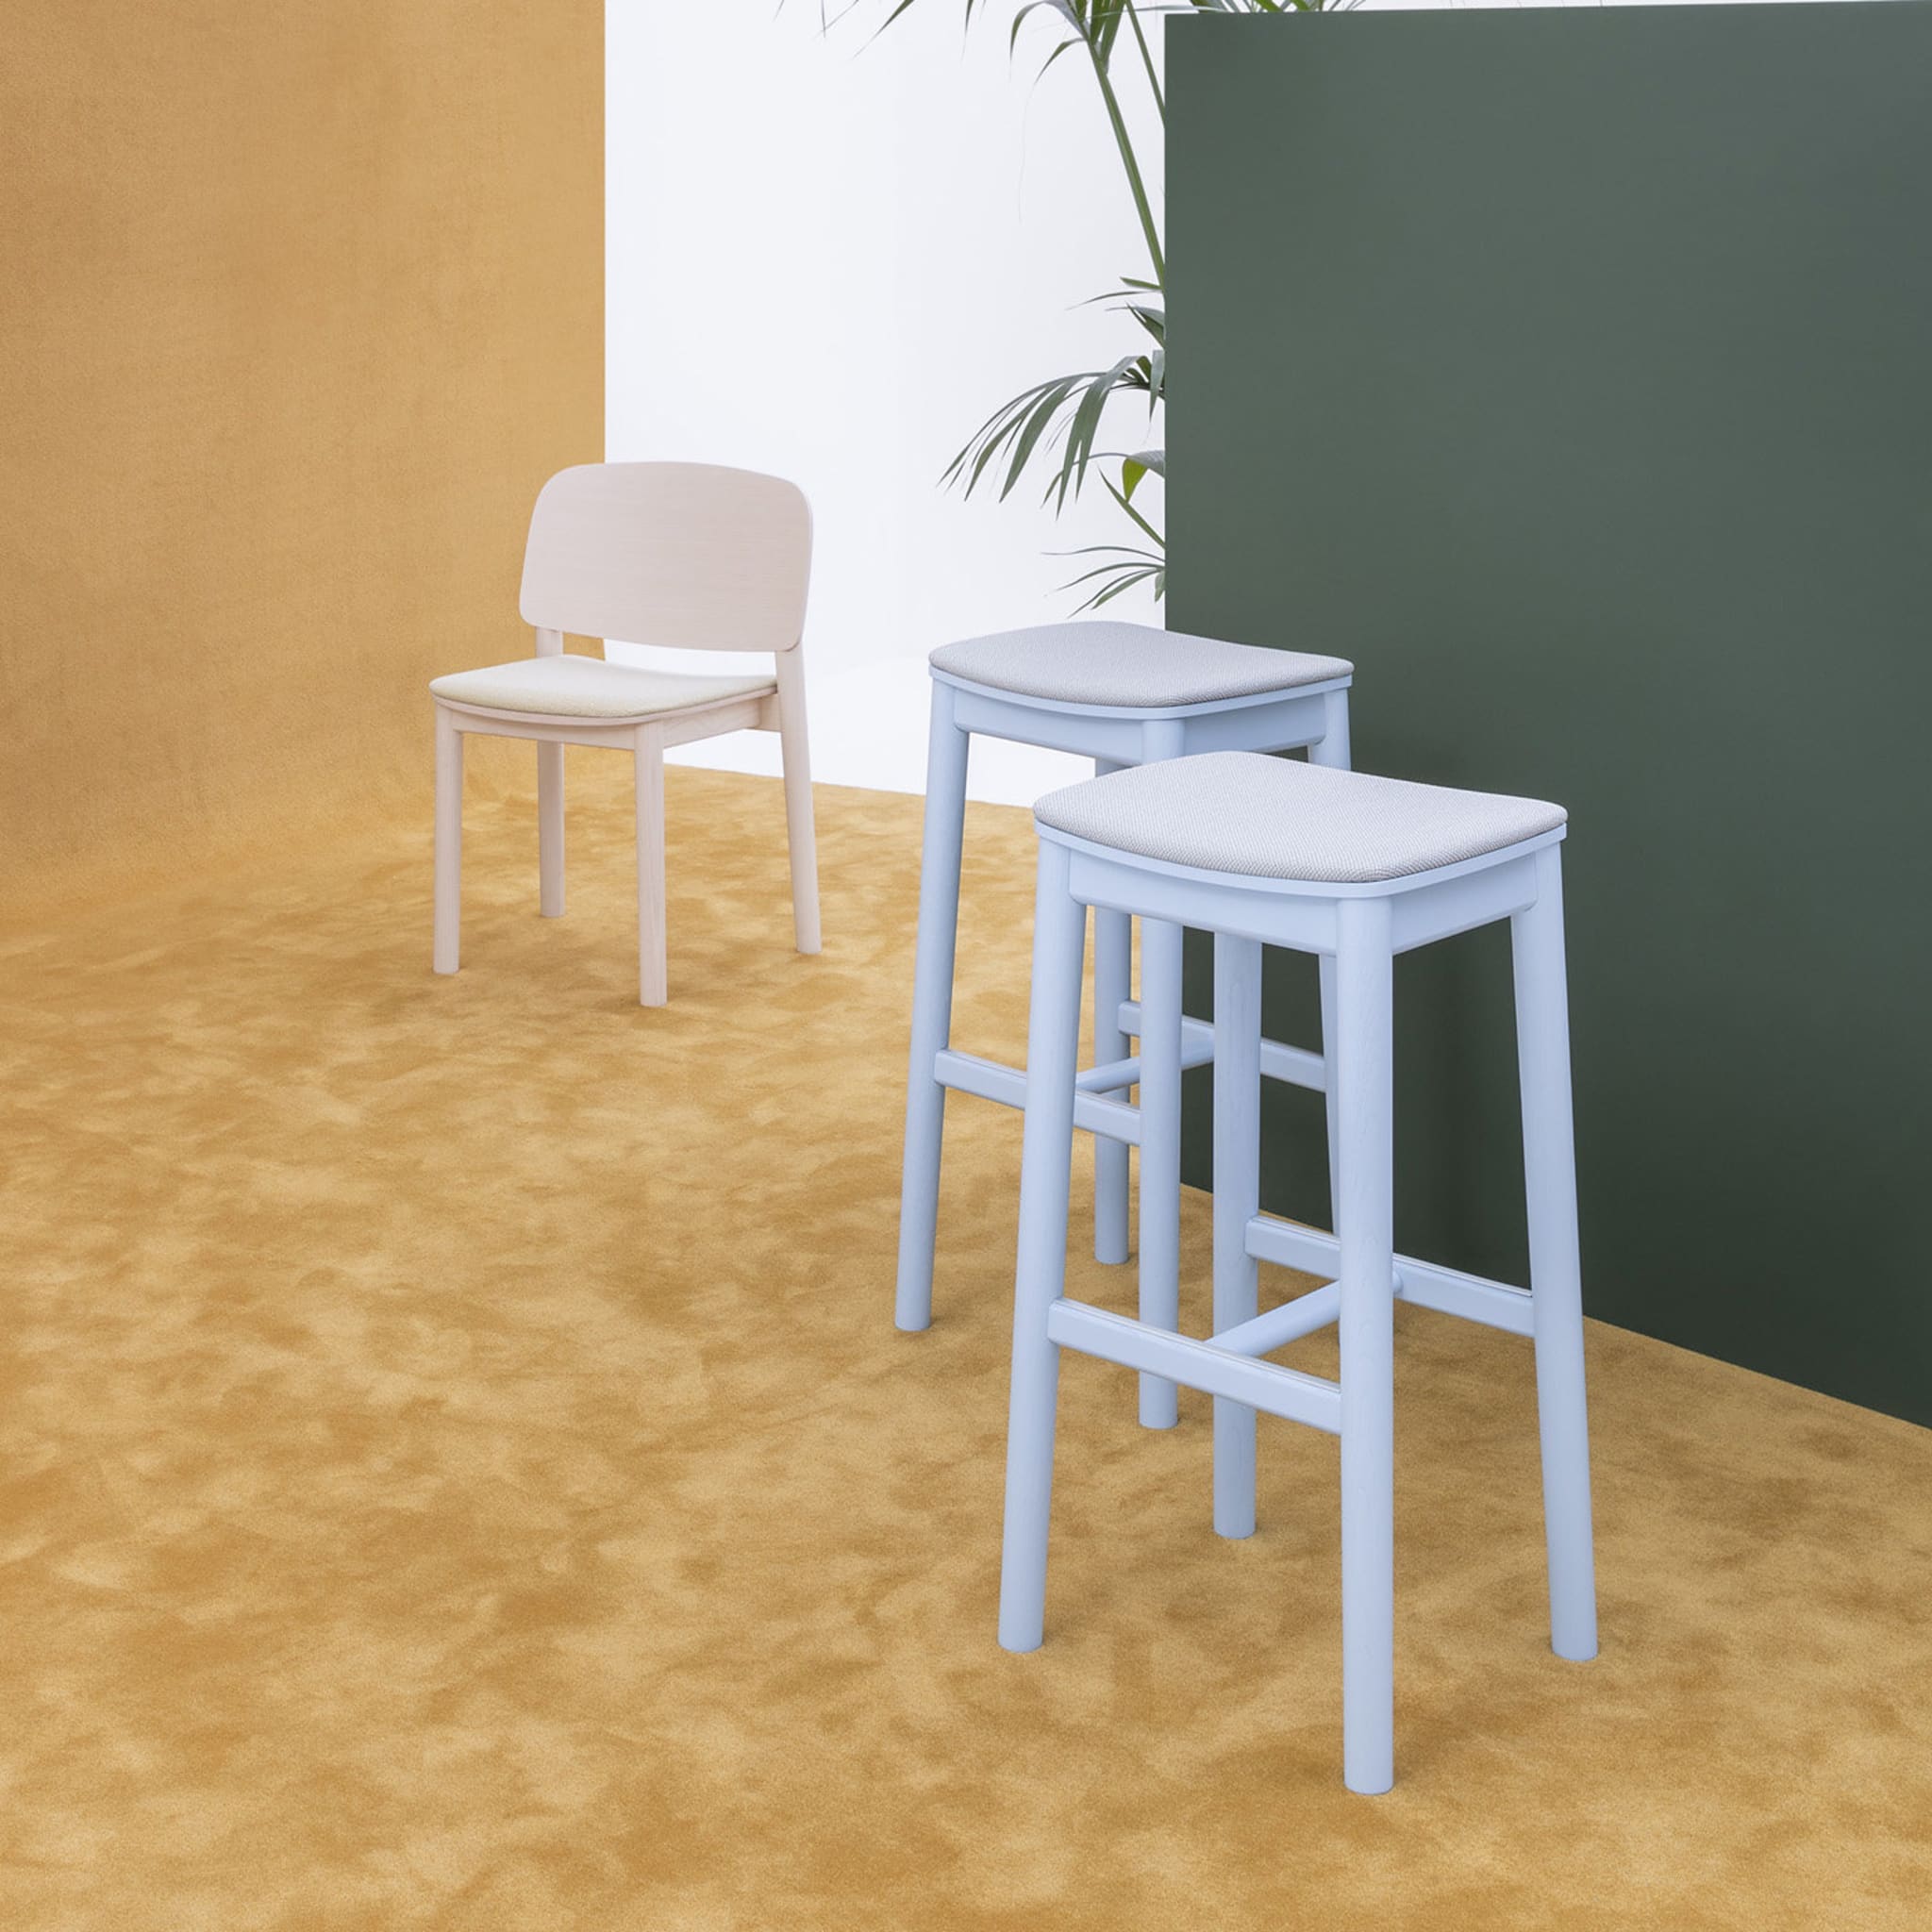 White Chair by Harri Koskinen - Alternative view 3